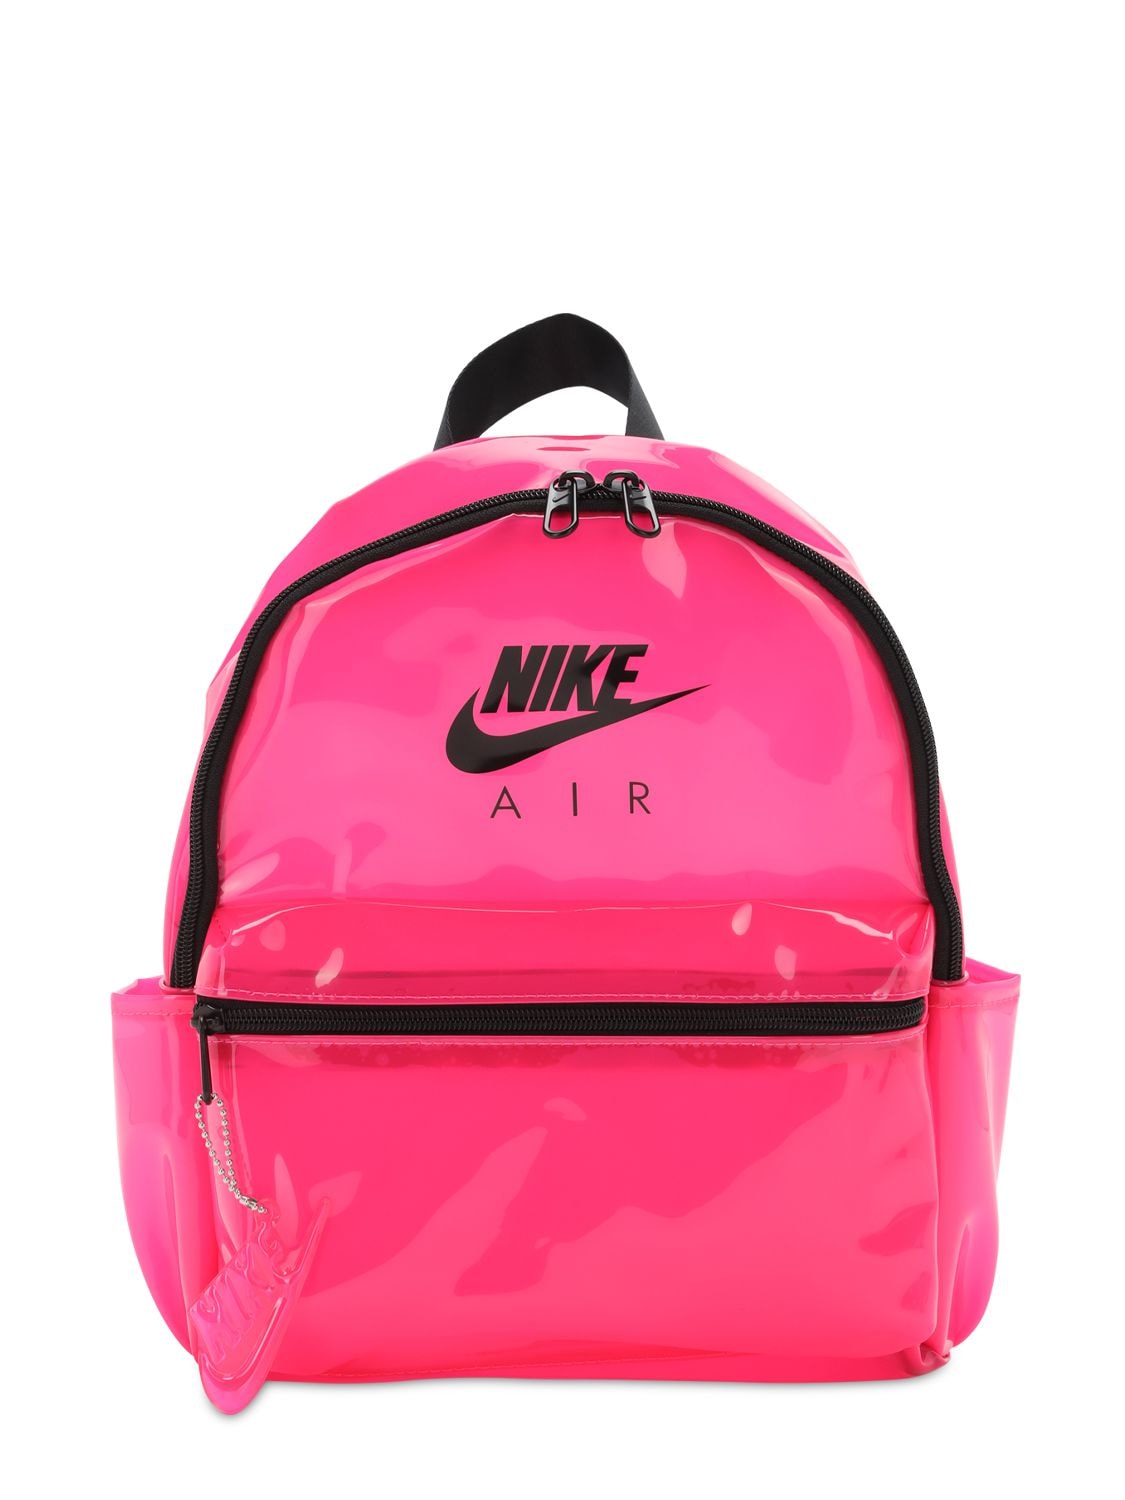 nike air backpack pink